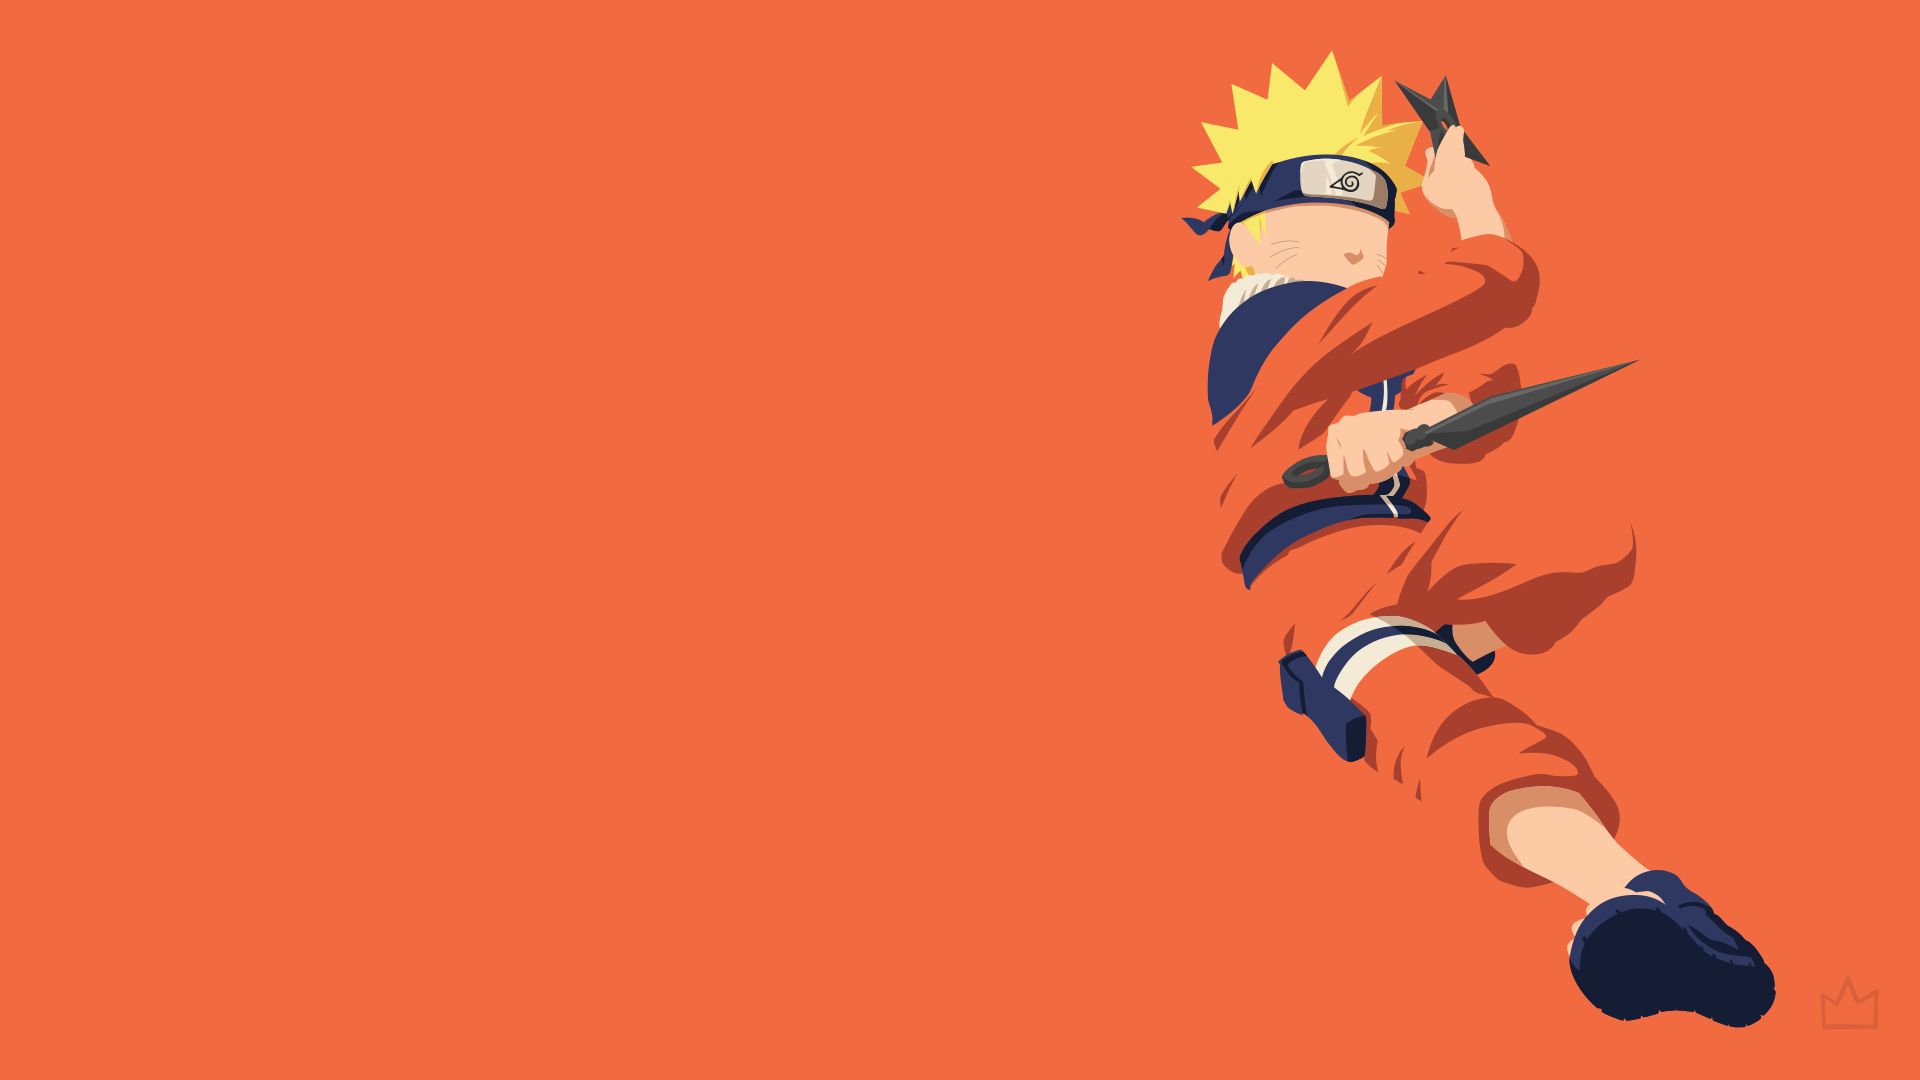 Uzumaki Naruto Naruto by Klikster on